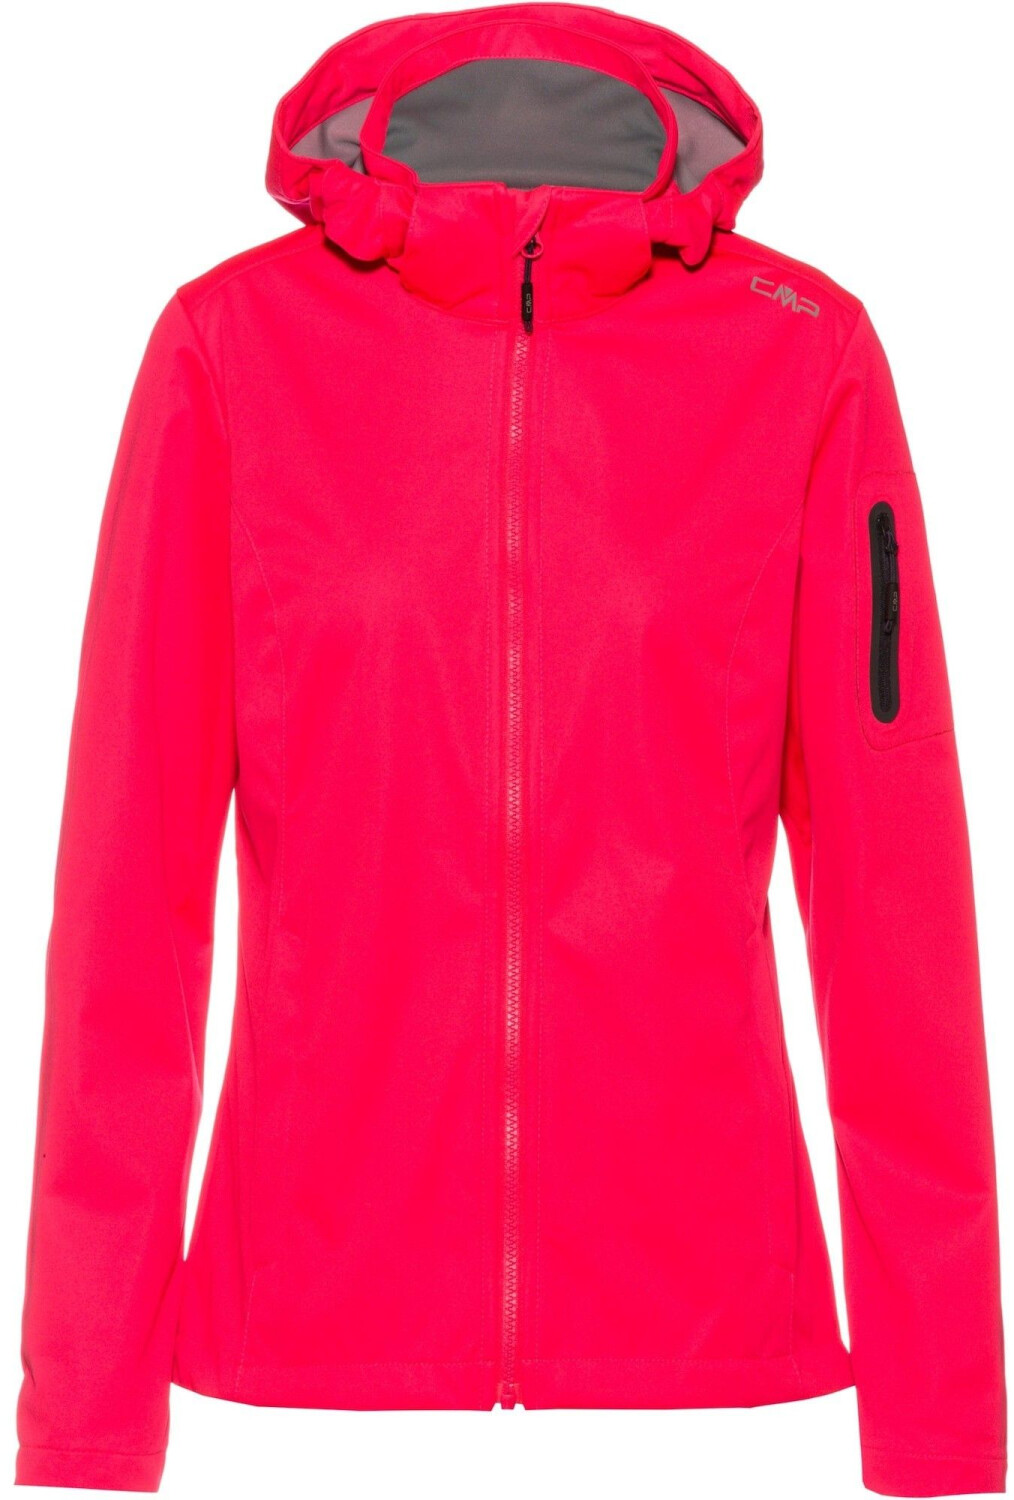 CMP Light Softshell Jacket 30,19 Preisvergleich | Women € (39A5016) ab bei